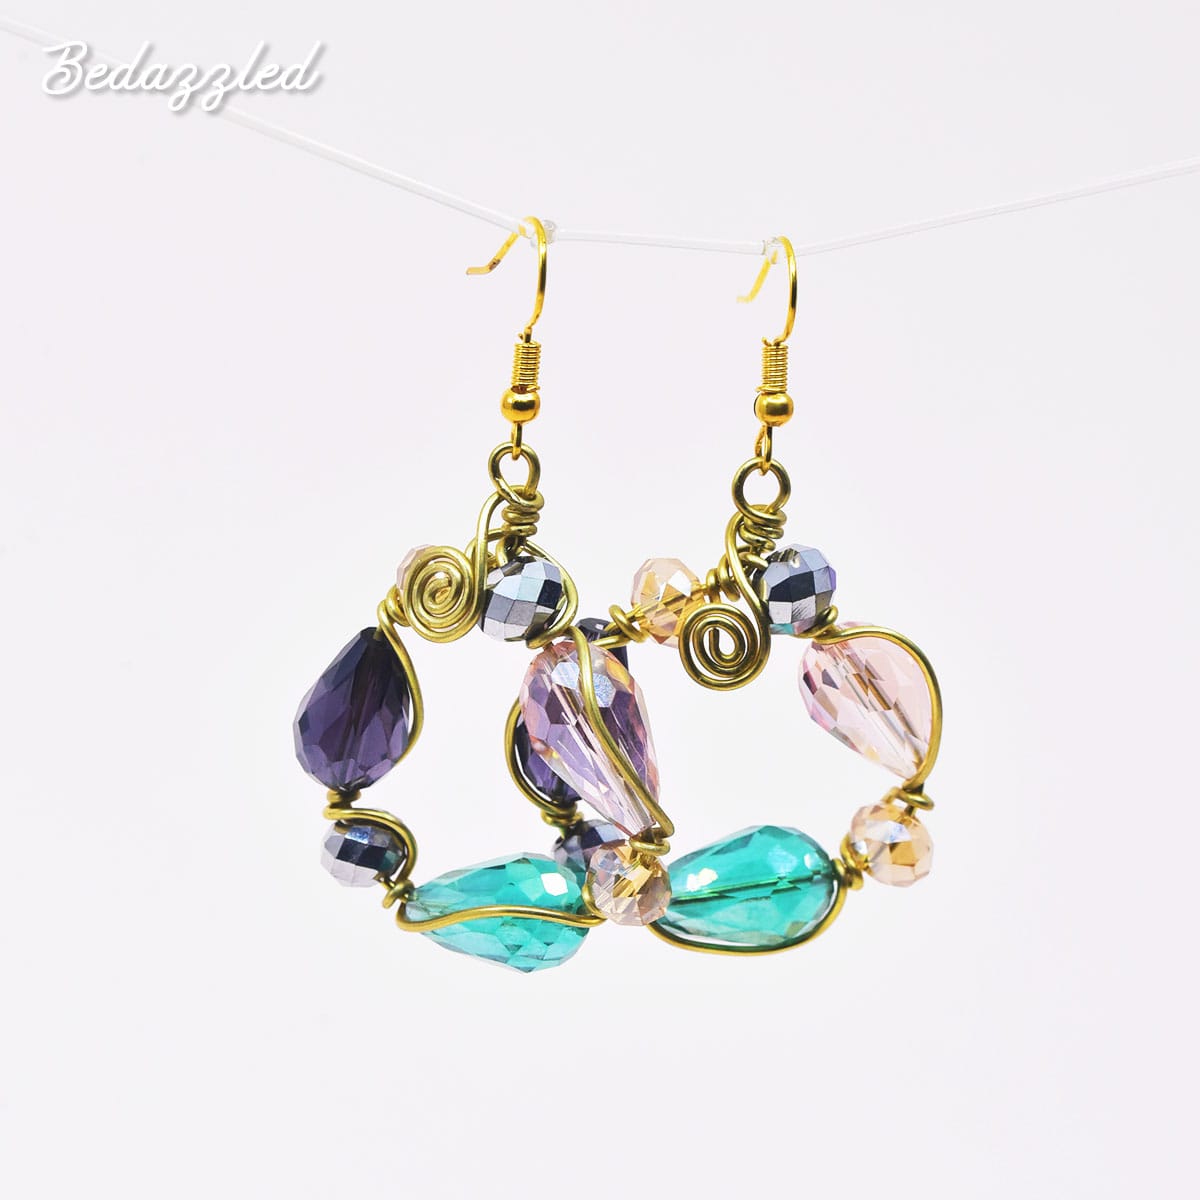 Bejeweled Style 4 - Earrings